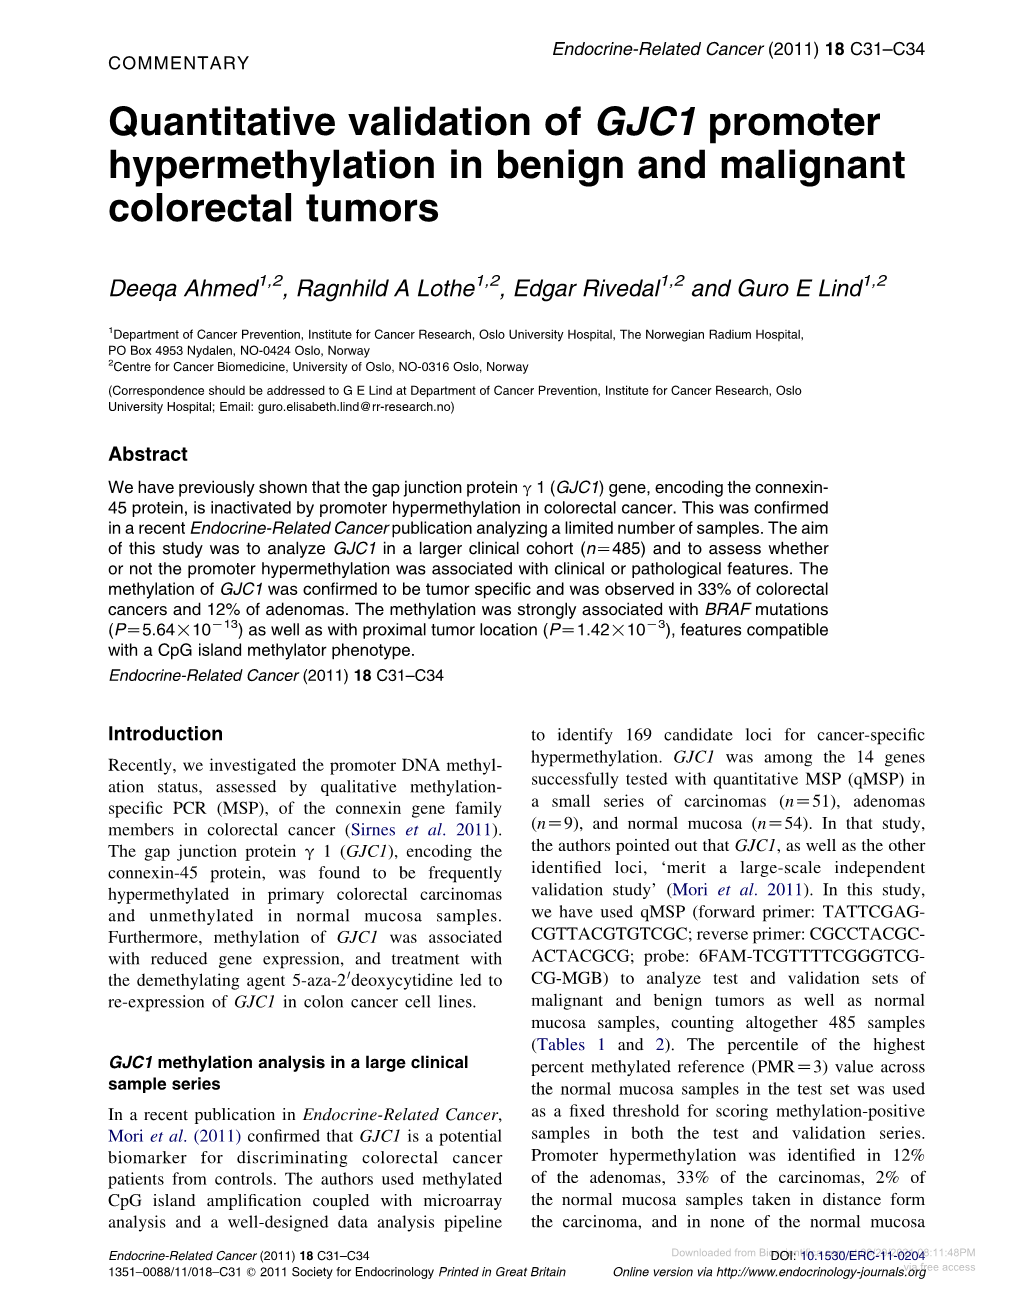 Quantitative Validation of GJC1 Promoter Hypermethylation in Benign and Malignant Colorectal Tumors